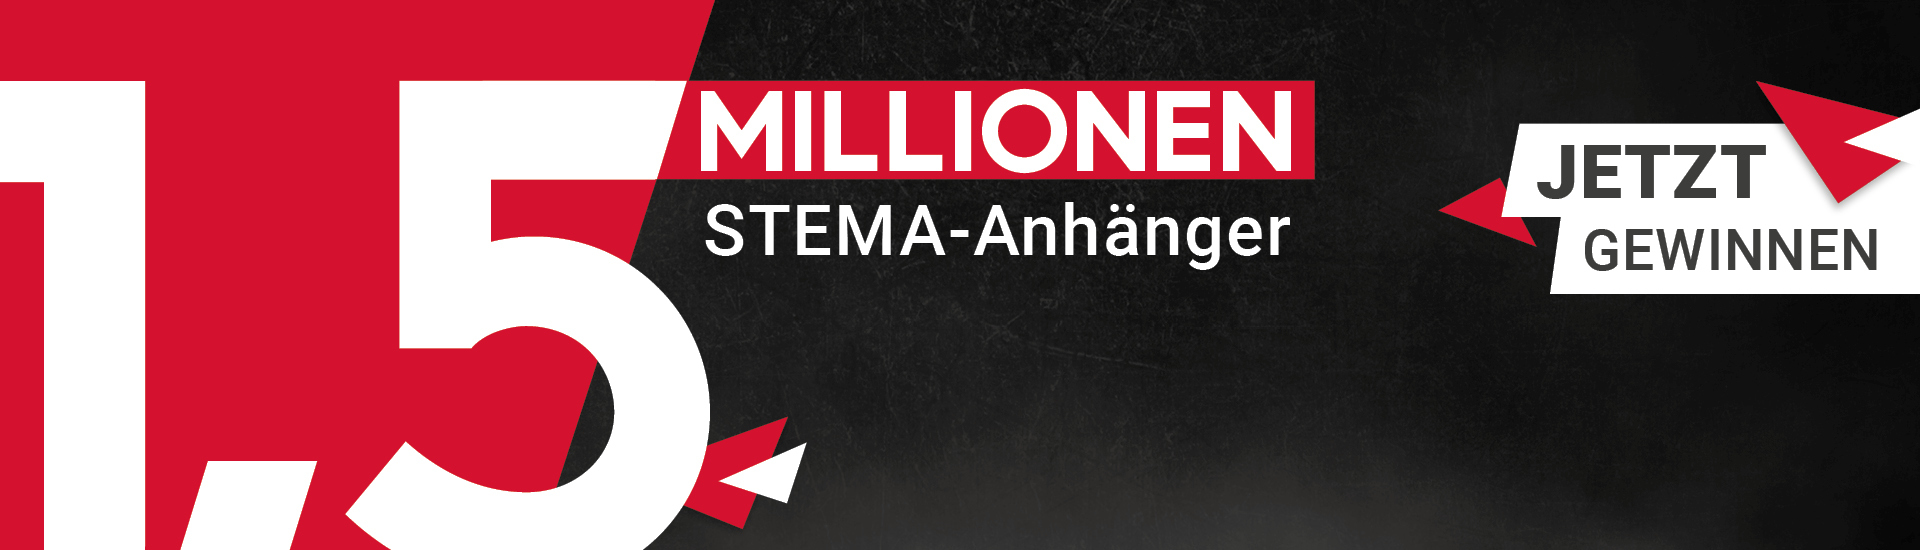 1.5 million STEMA trailers – Win now